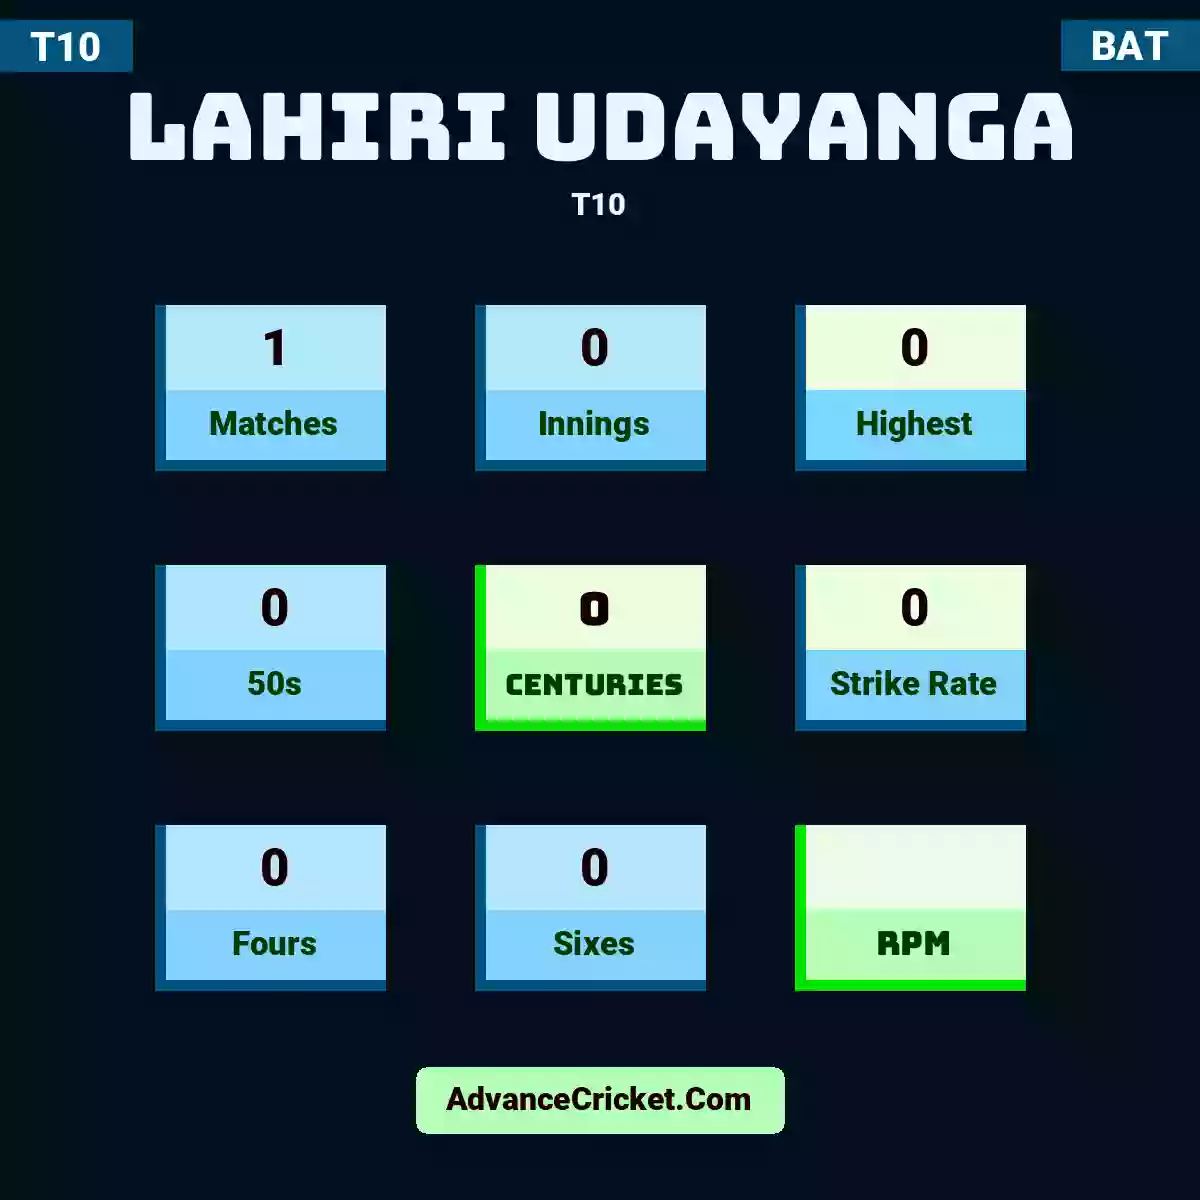 Lahiri Udayanga T10 , Lahiri Udayanga played 1 matches, scored 0 runs as highest, 0 half-centuries, and 0 centuries, with a strike rate of 0. L.Udayanga hit 0 fours and 0 sixes.